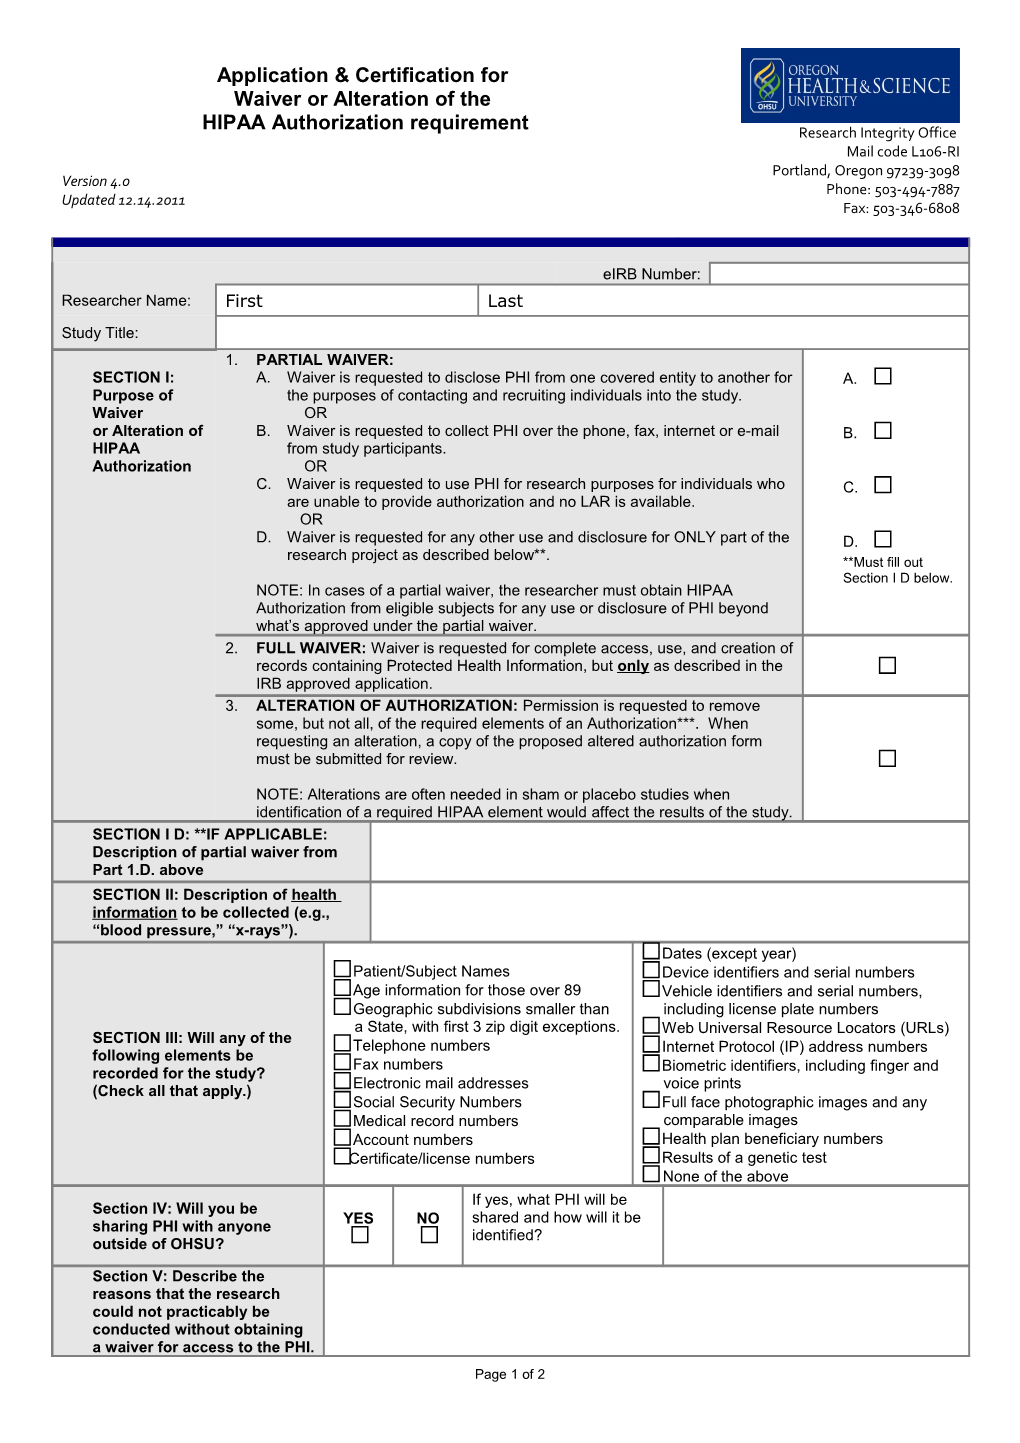 Regulatory Checklist HIP1 - Waiver of HIPAA Authorization